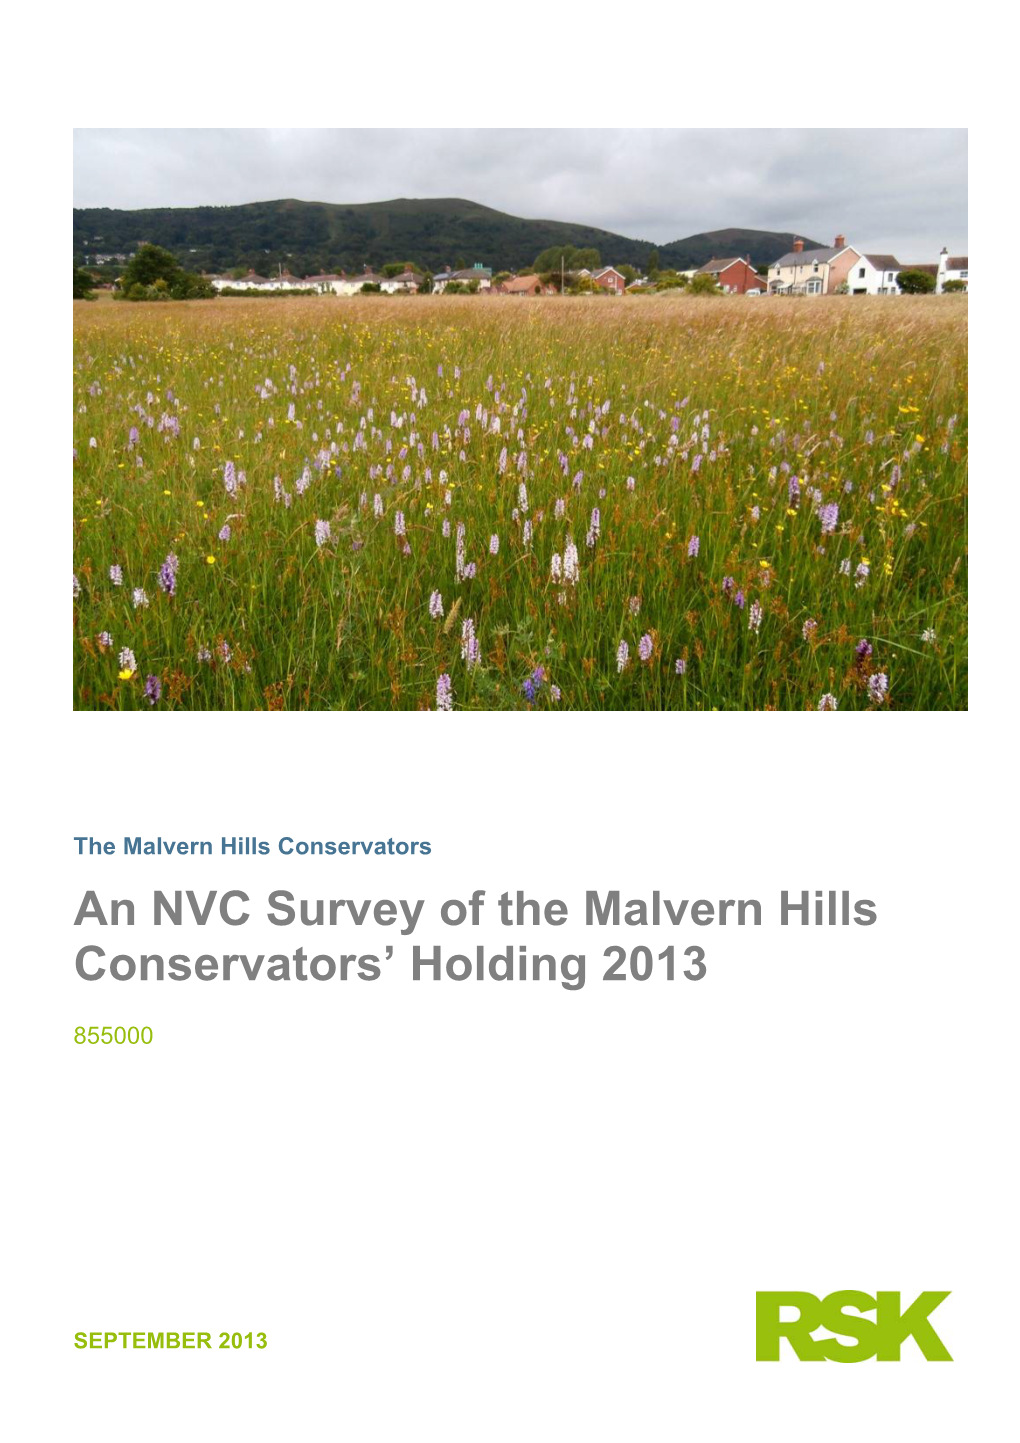 An NVC Survey of the Malvern Hills Conservators' Holding 2013